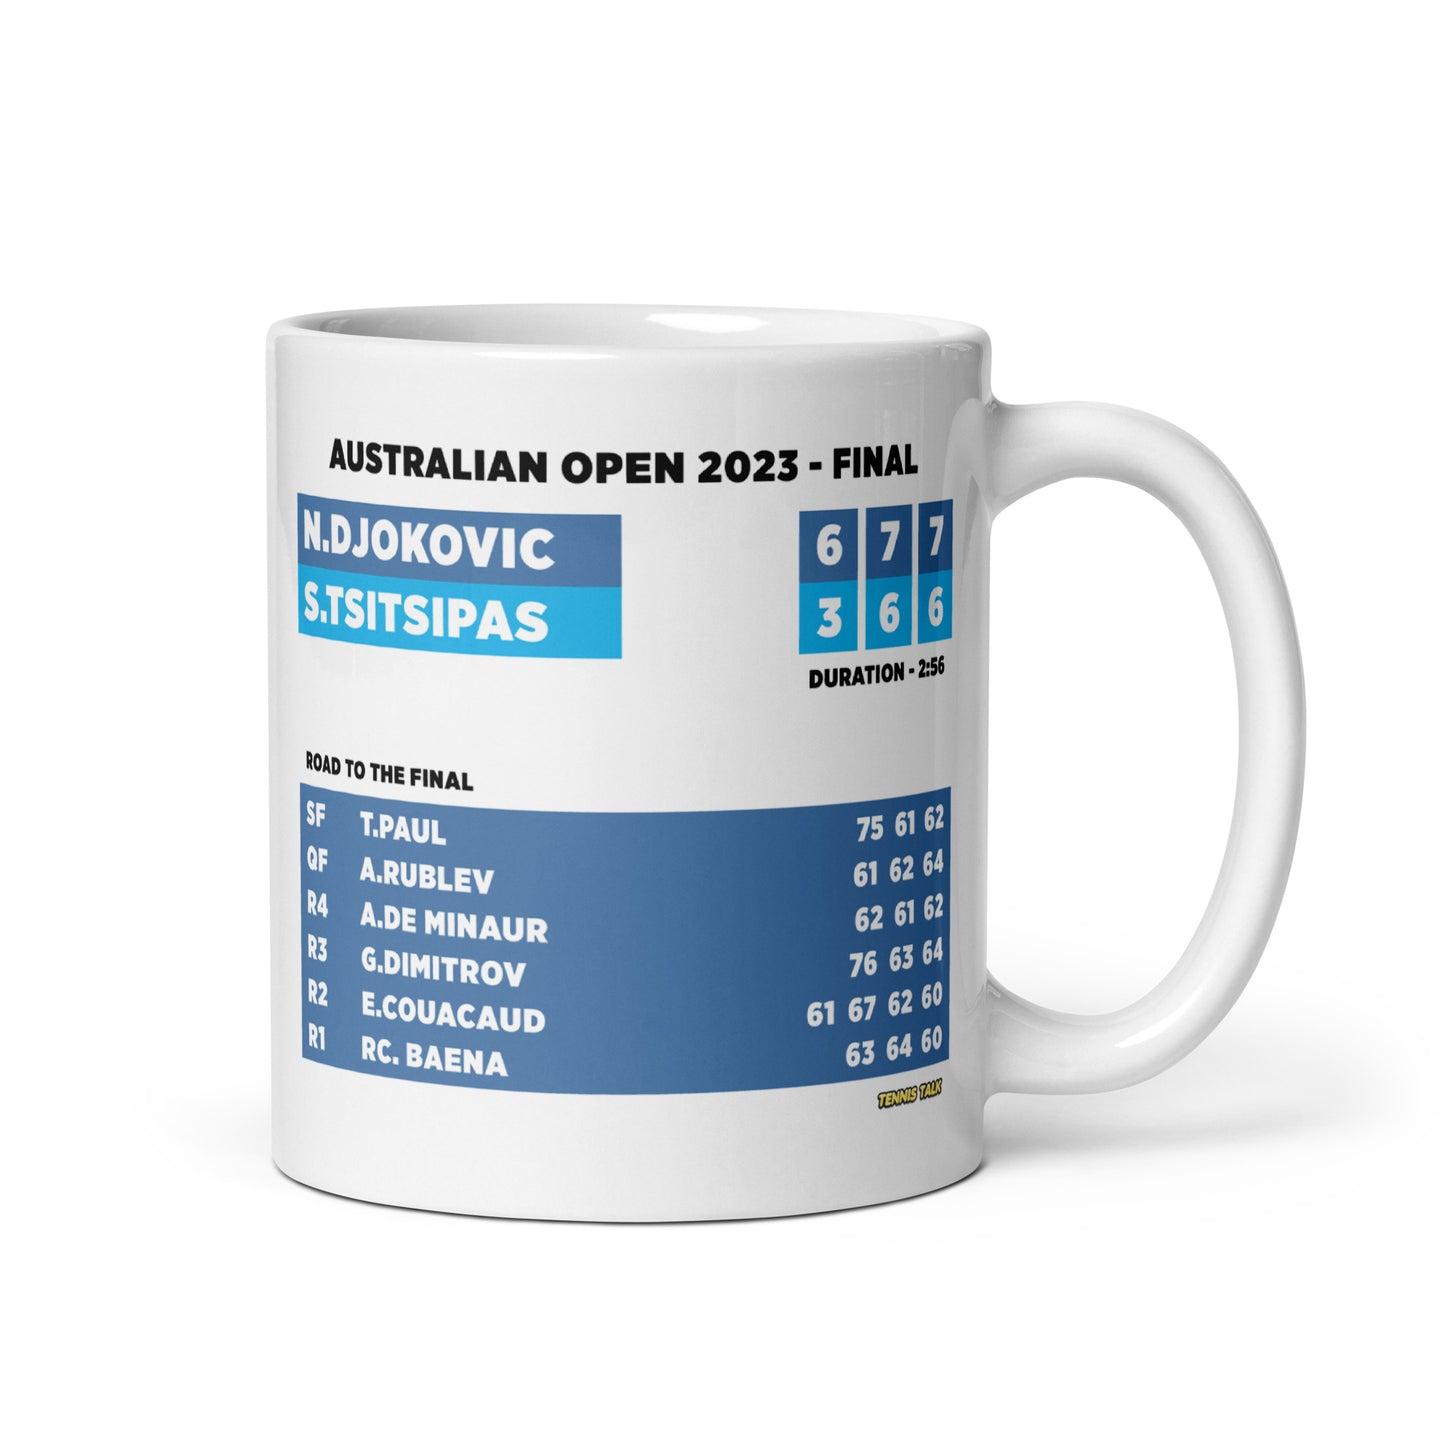 Novak Djokovic vs Stefanos Tsitsipas - Australia Open 2023 Final Mug